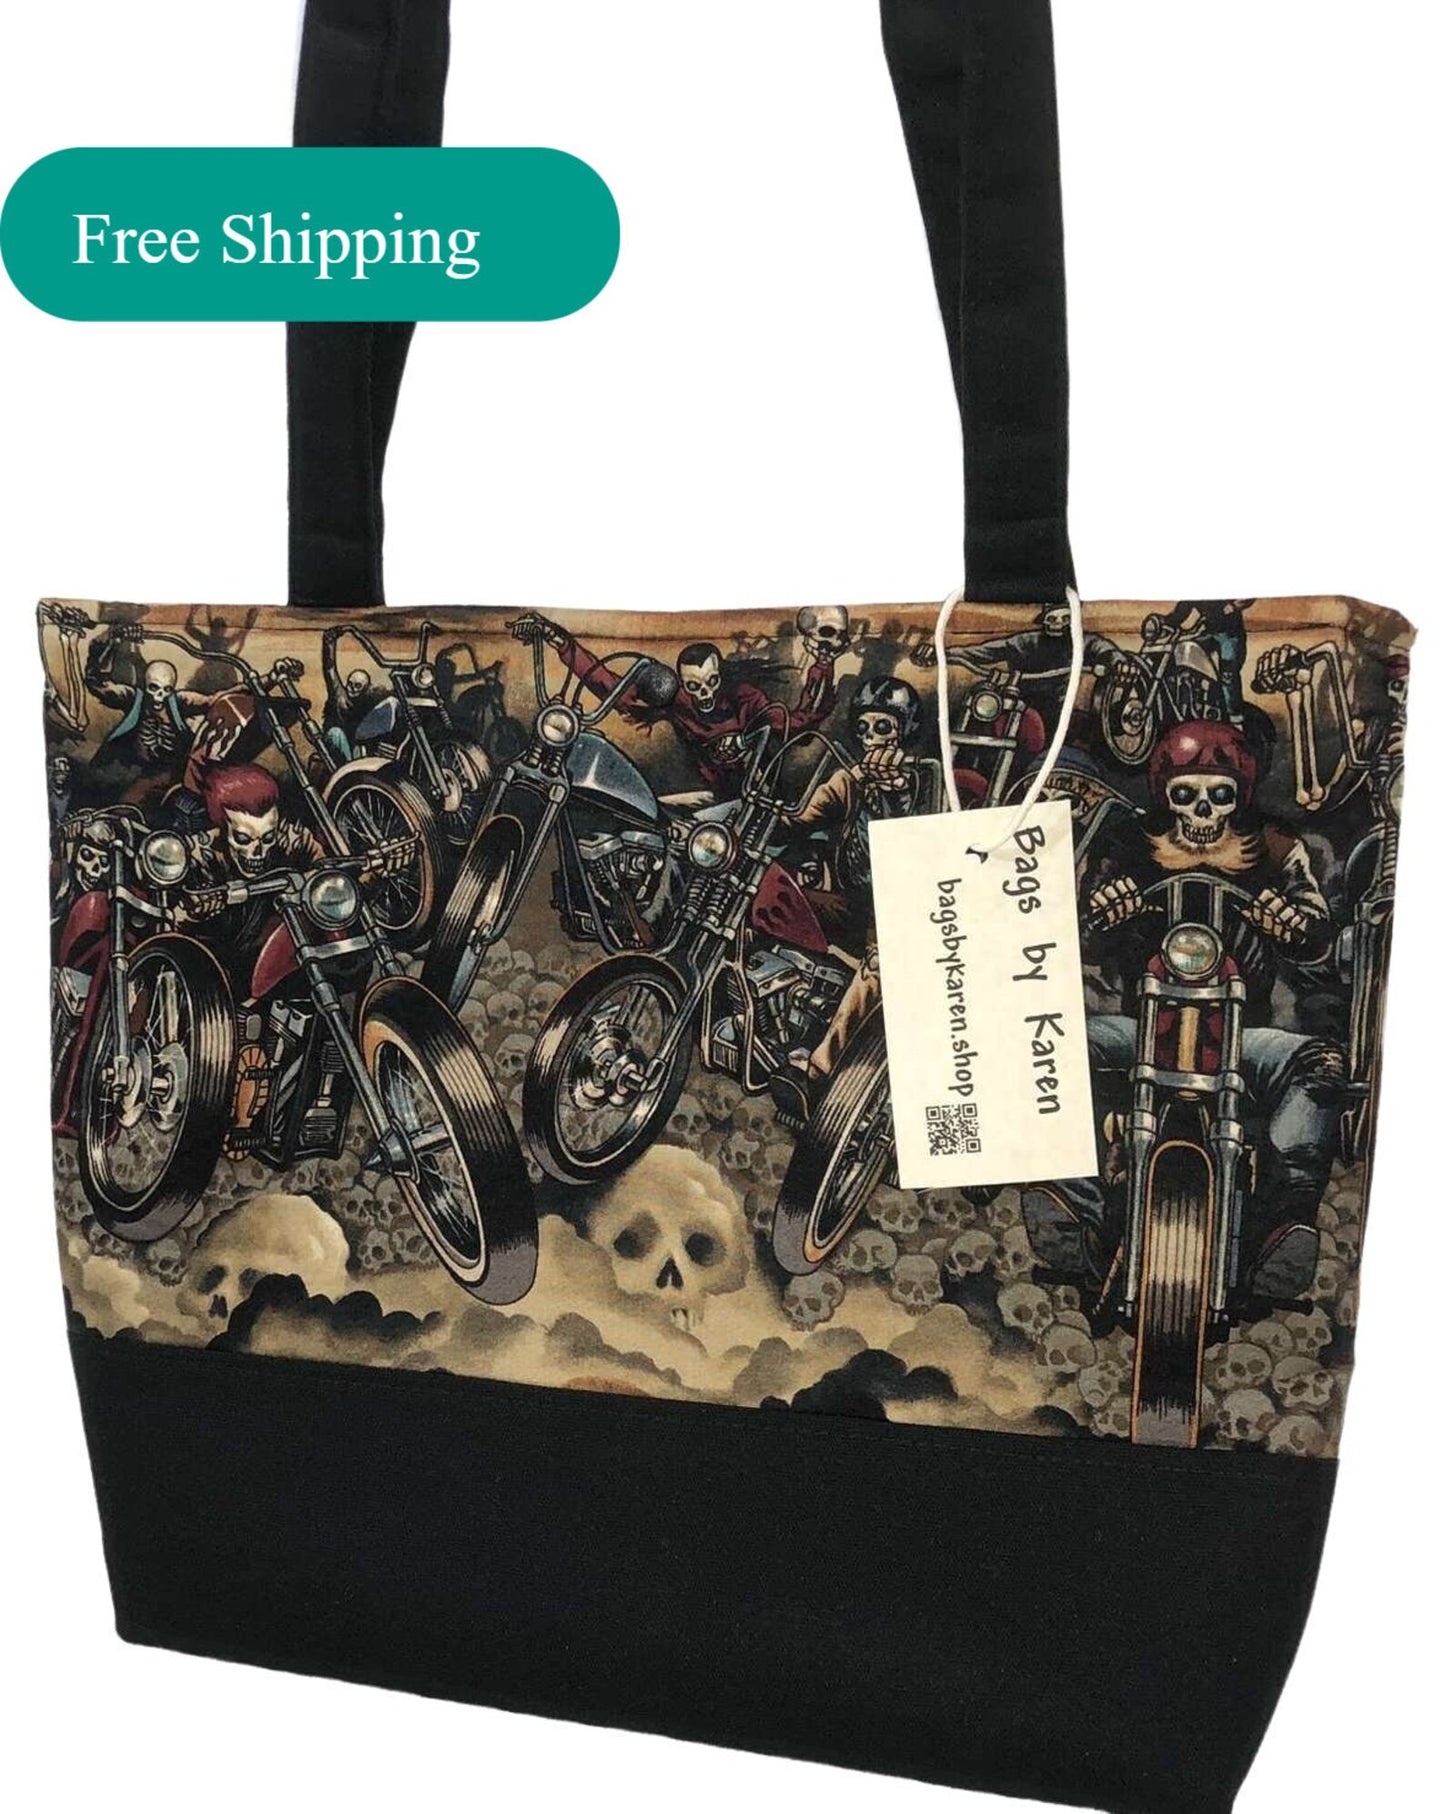 Motorcycle Rider Shoulder Bag Purse Skeleton Motorcyclist Biker Chick Halloween Handbag Tote w/ Black Wristlet Key FOB